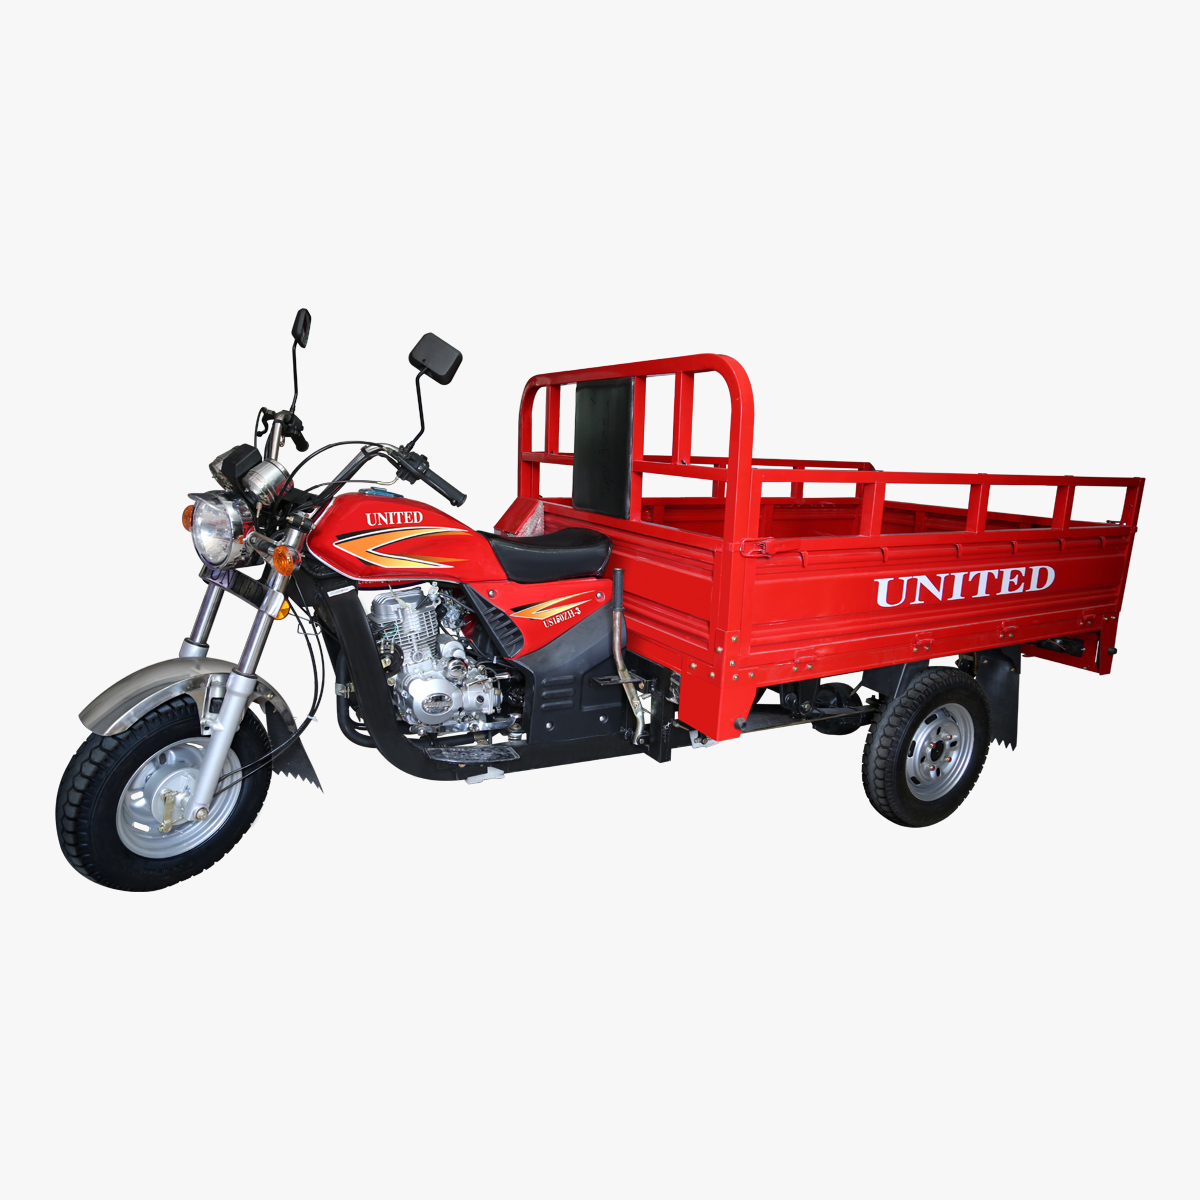 United Loader 150cc Price in Pakistan 2023